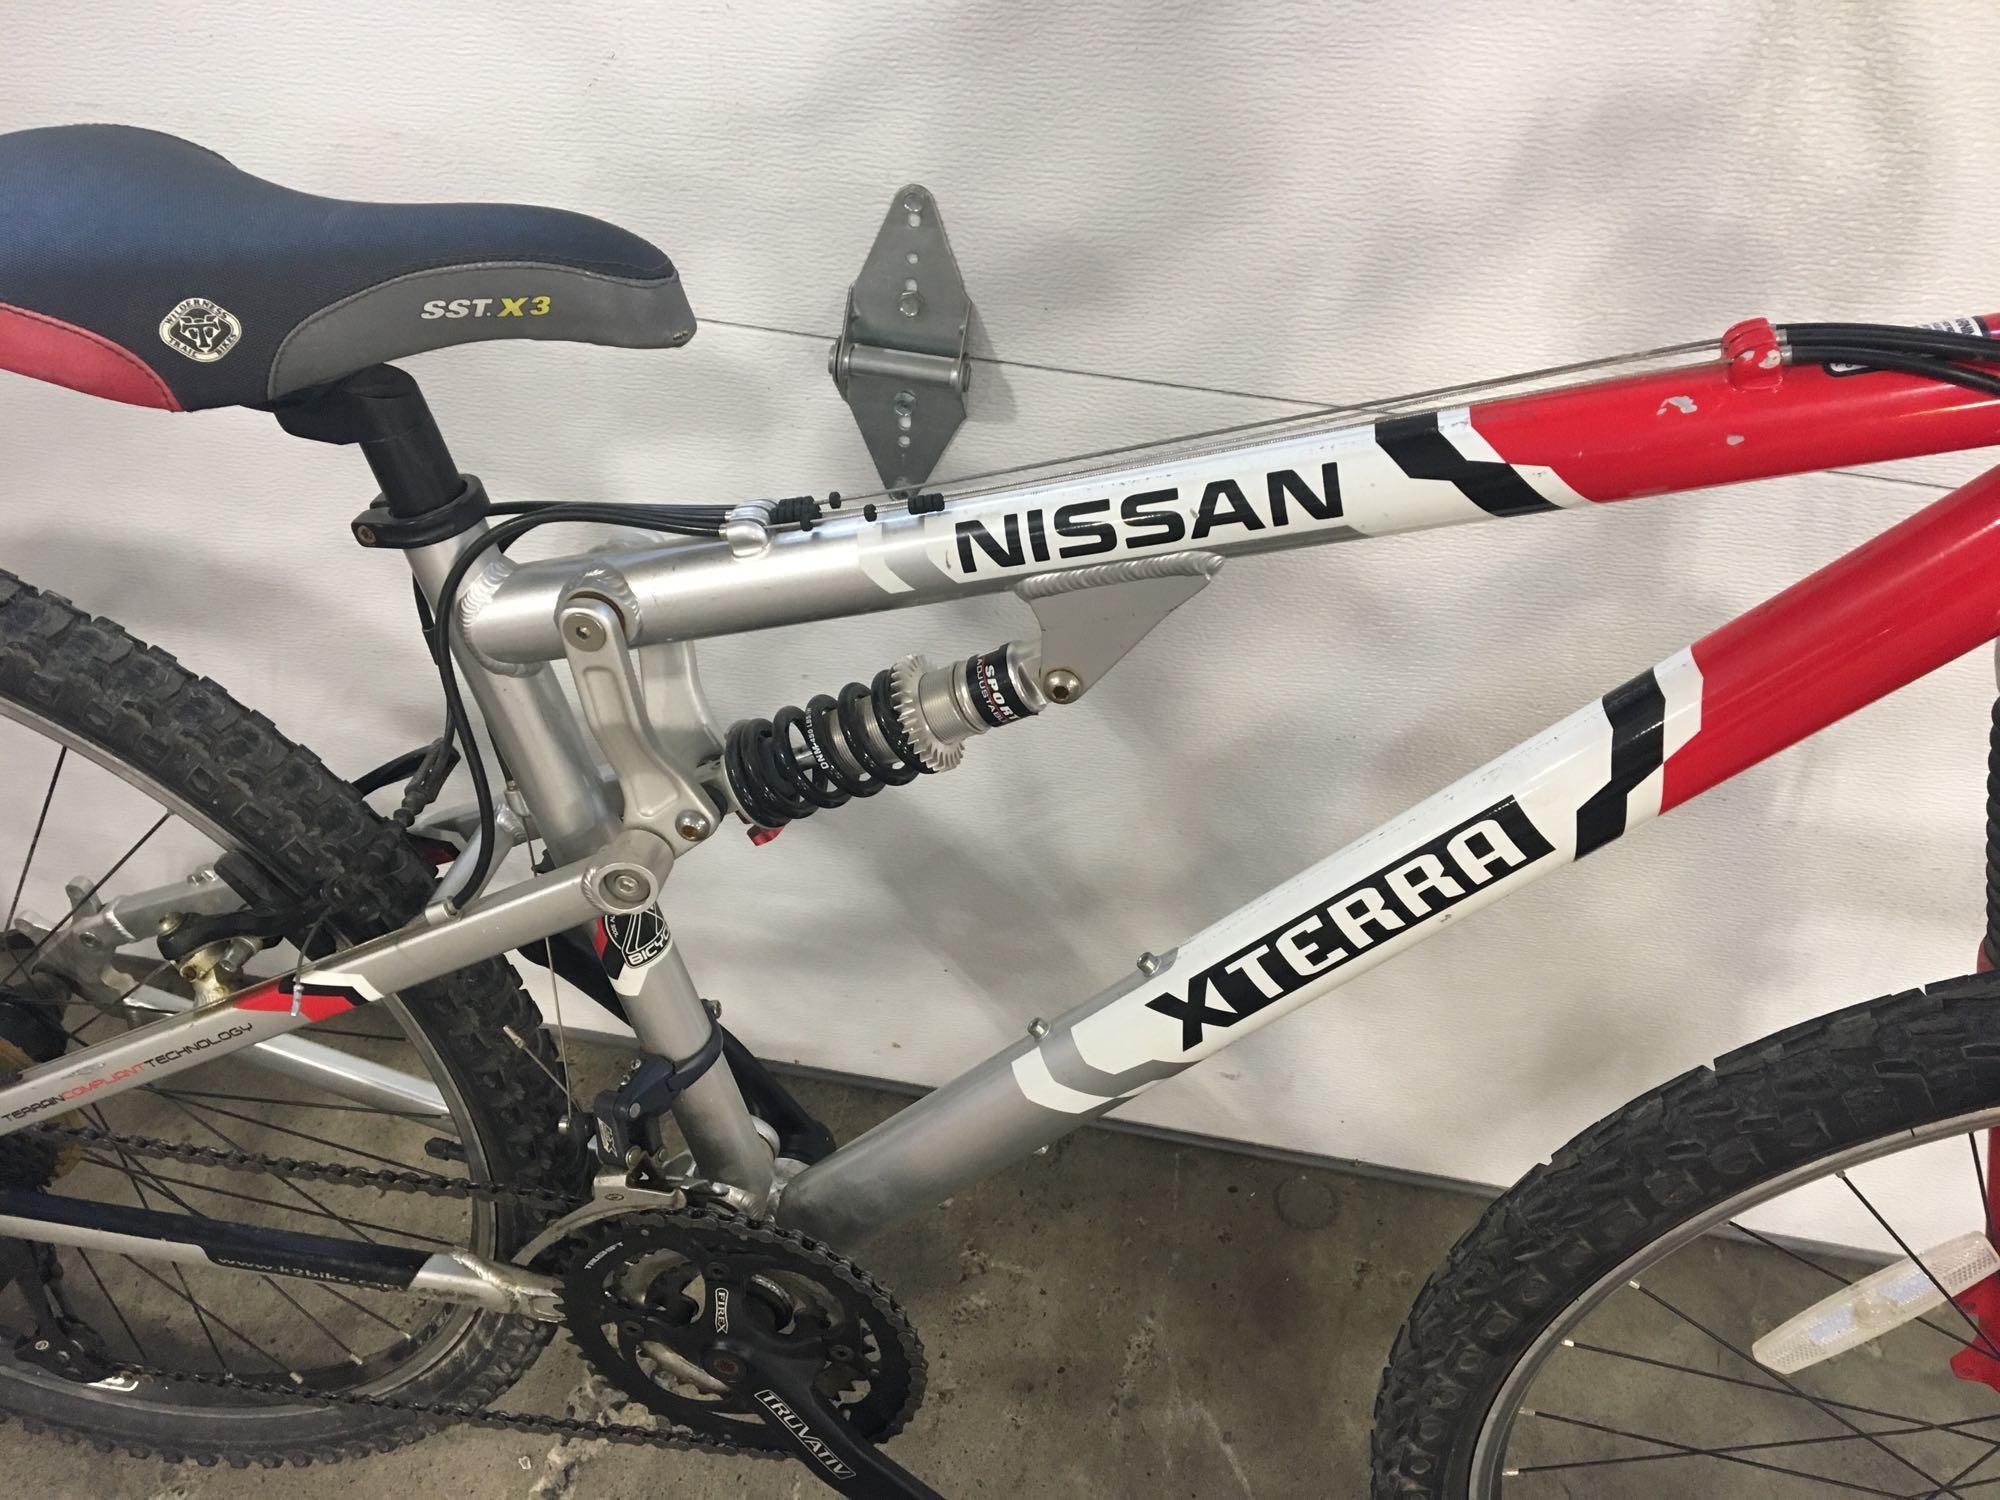 NISSAN XTERRA (SST.X3) wilderness trail bike